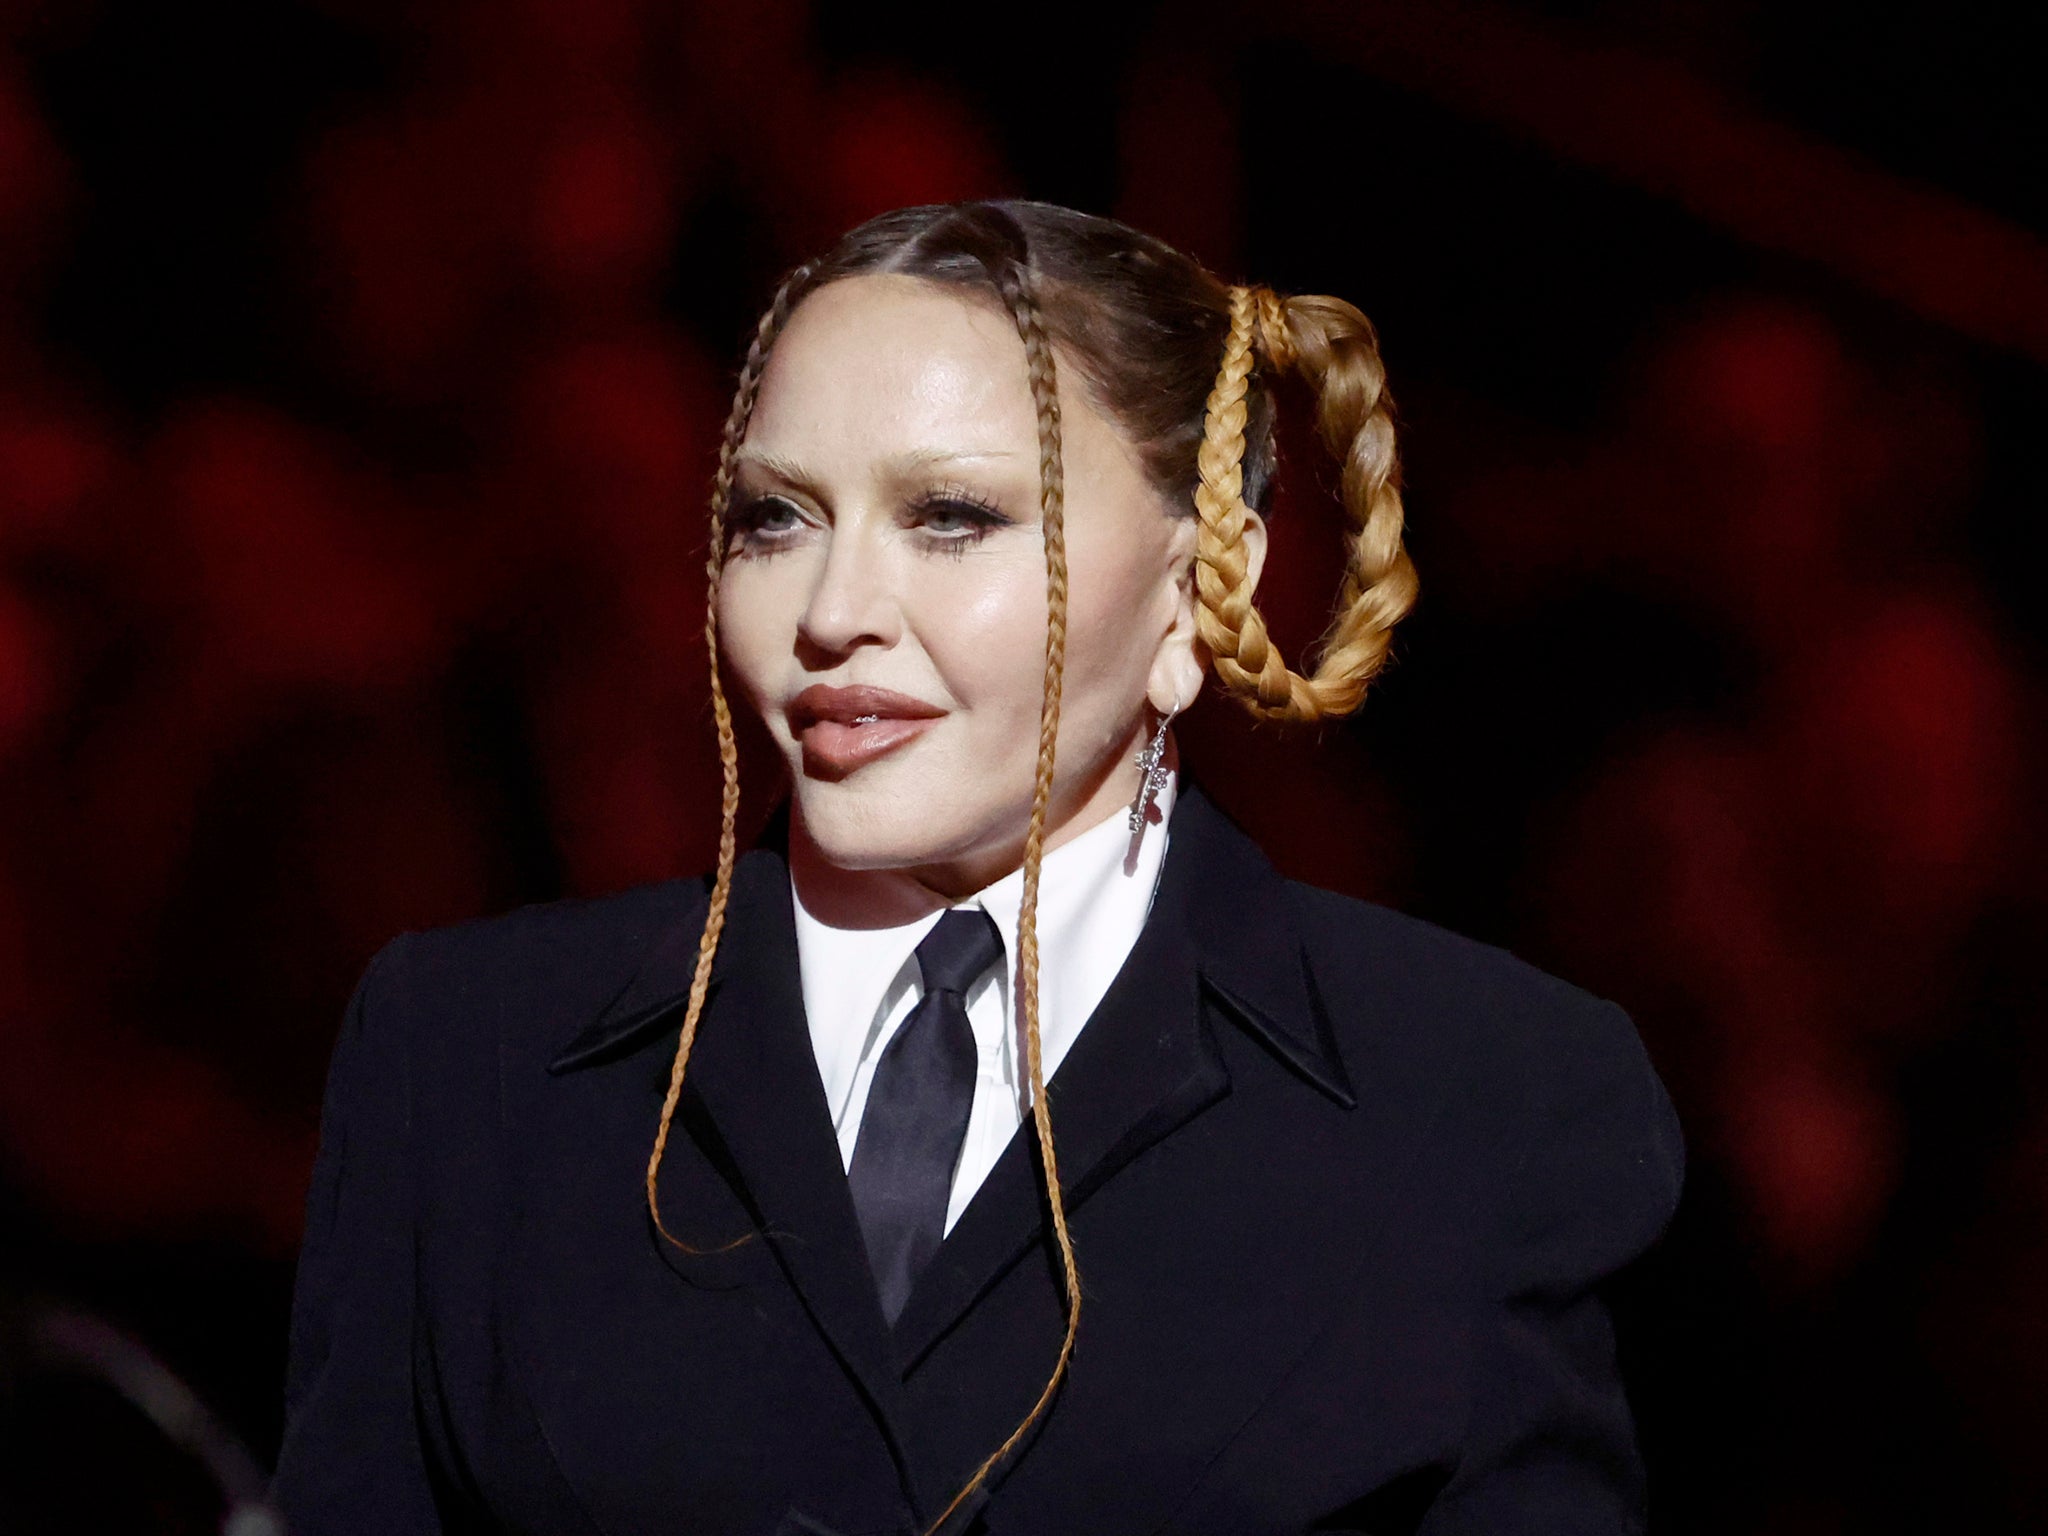 Madonna at the Grammy Awards on Sunday night